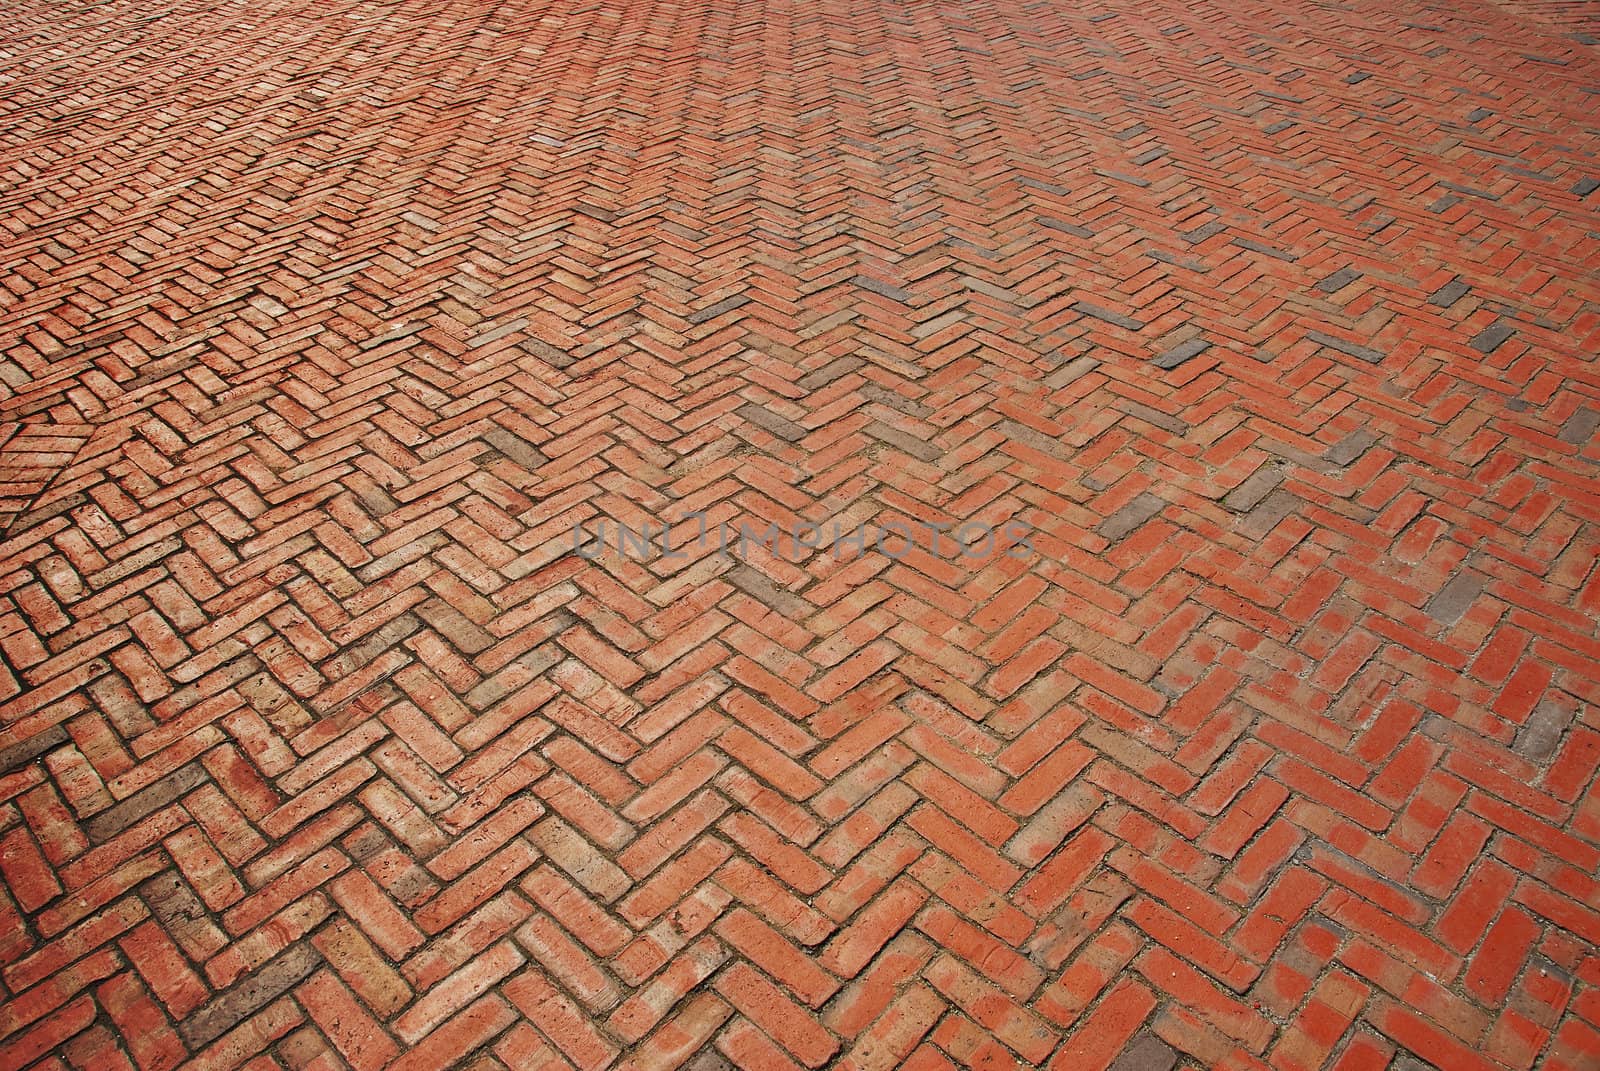 Bricks in herringbone design